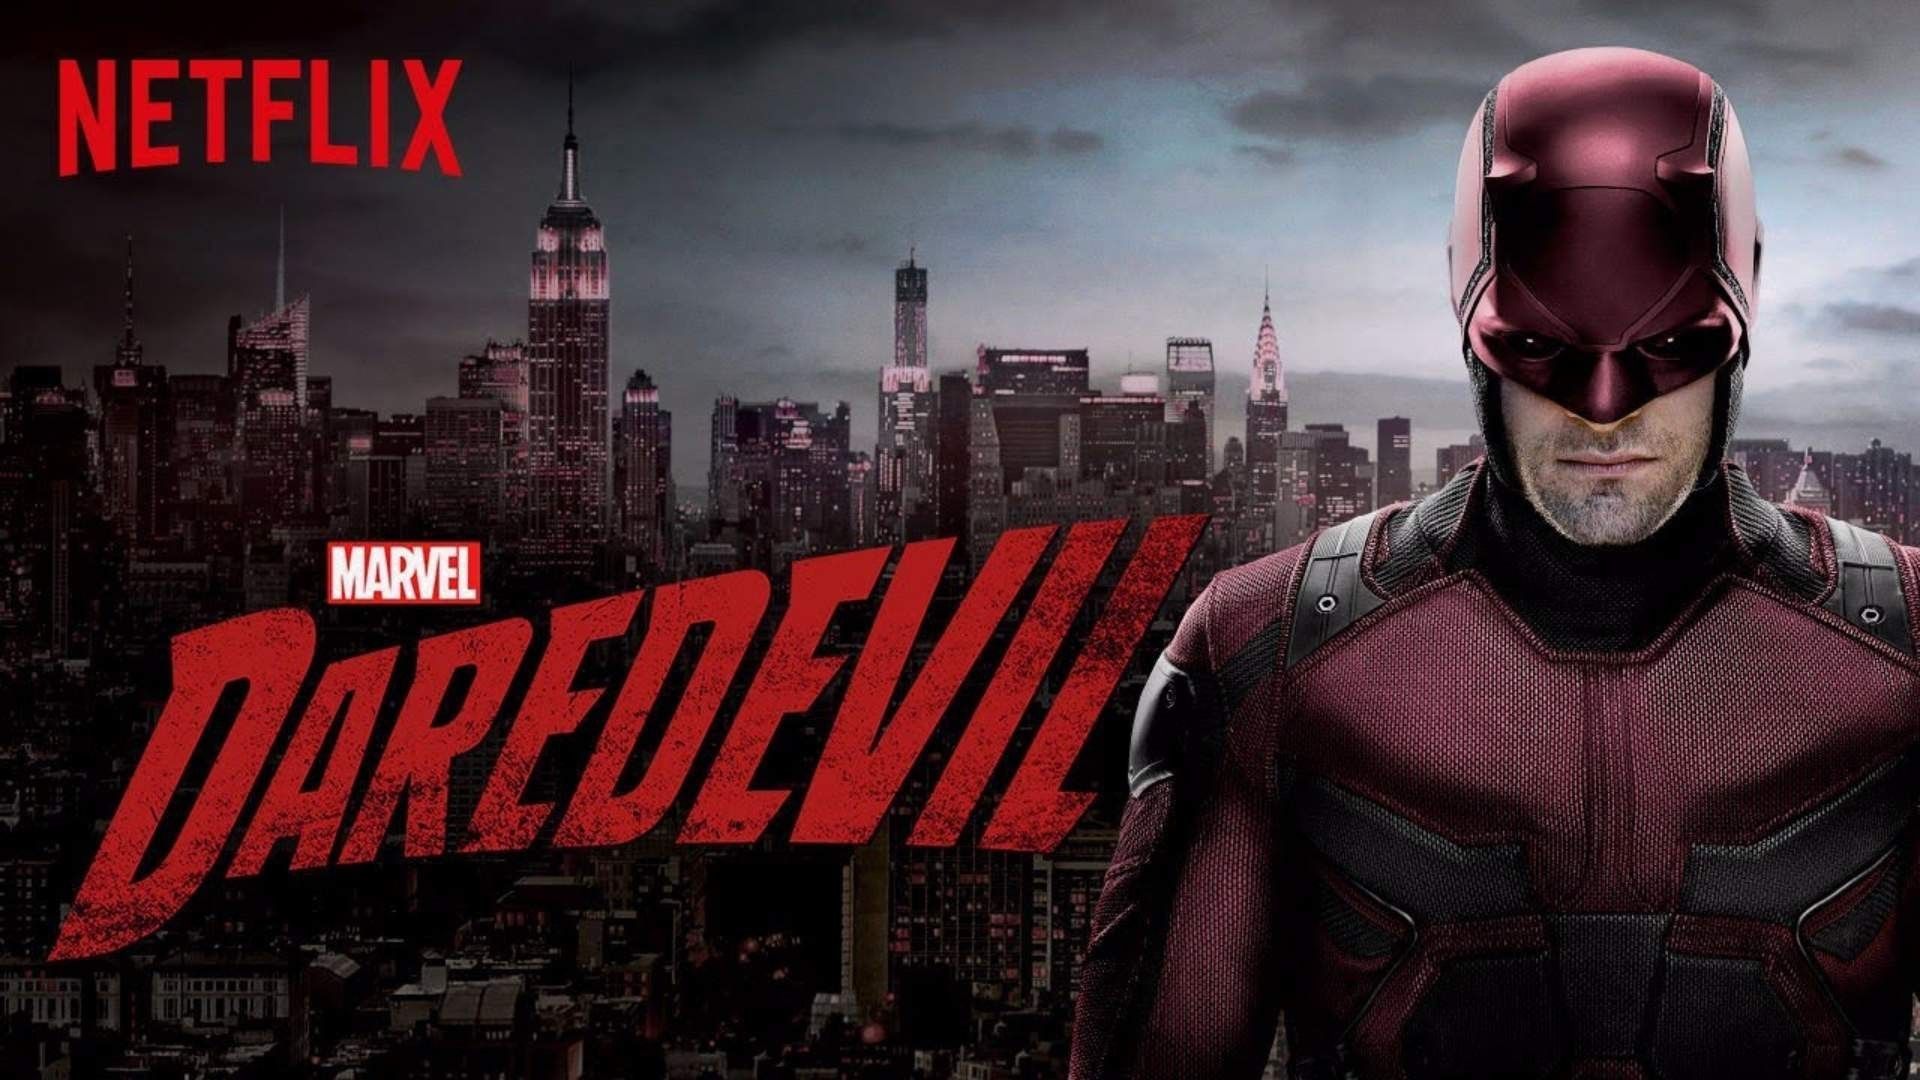 Netflix Daredevil Hd Wallpapers Free Download Wallpaperxyz.